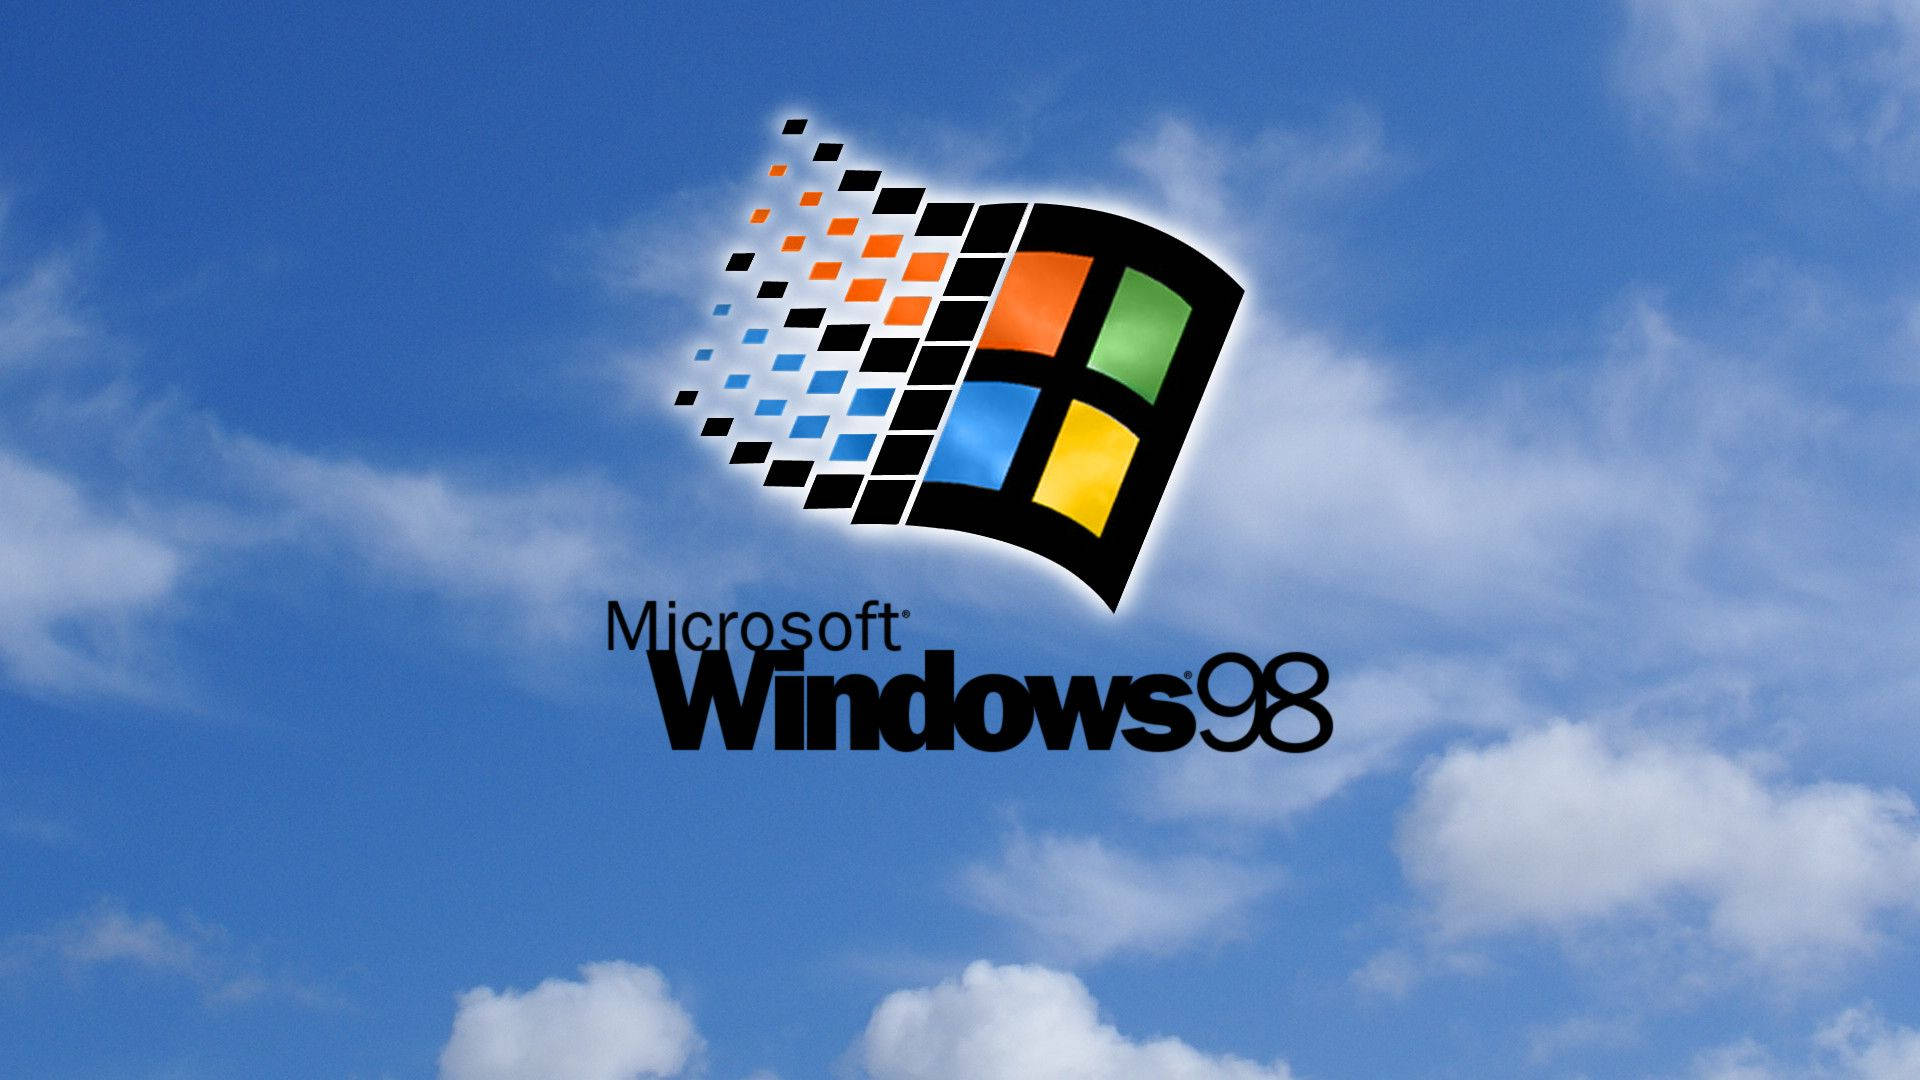 Microsoft Windows 95 Background